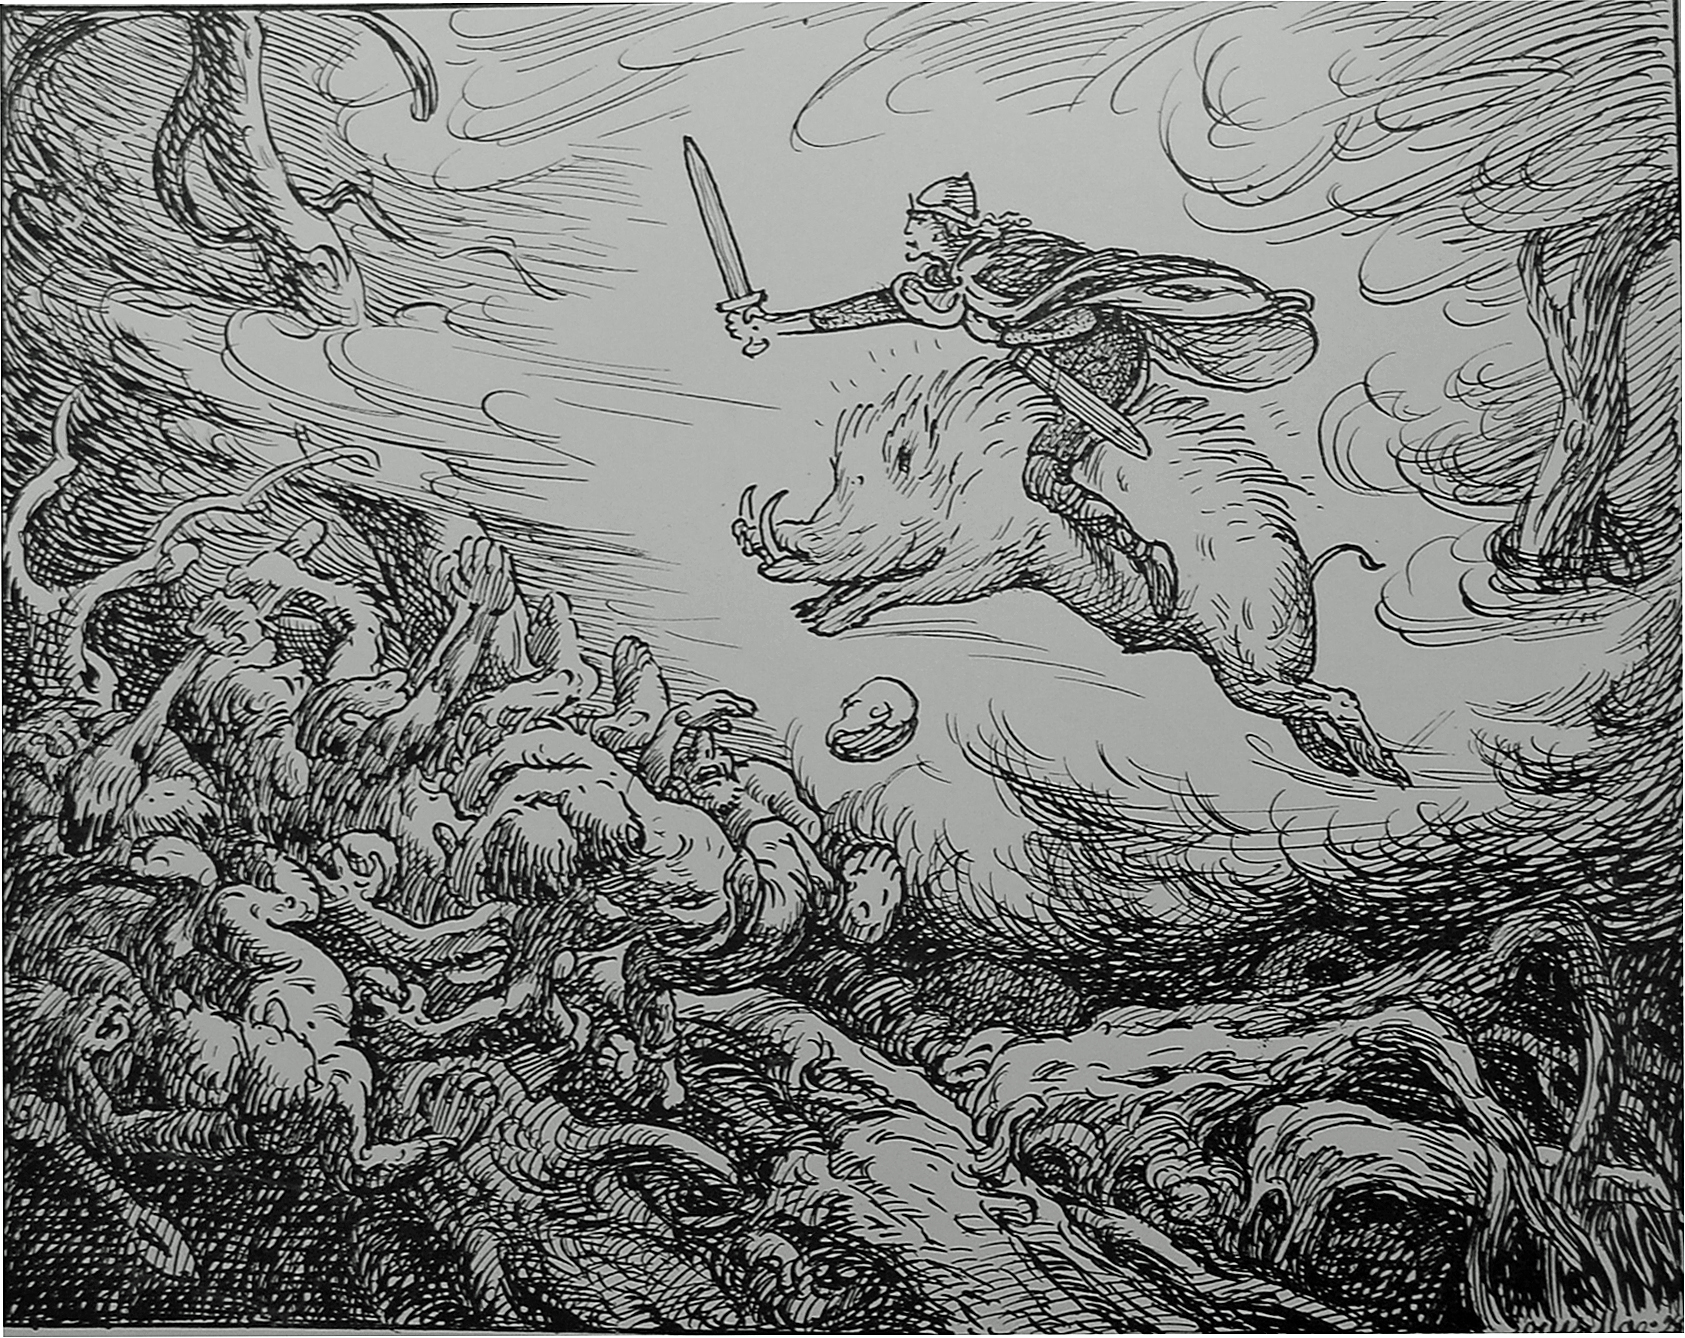 Freyr at The Battle of Ragnarök